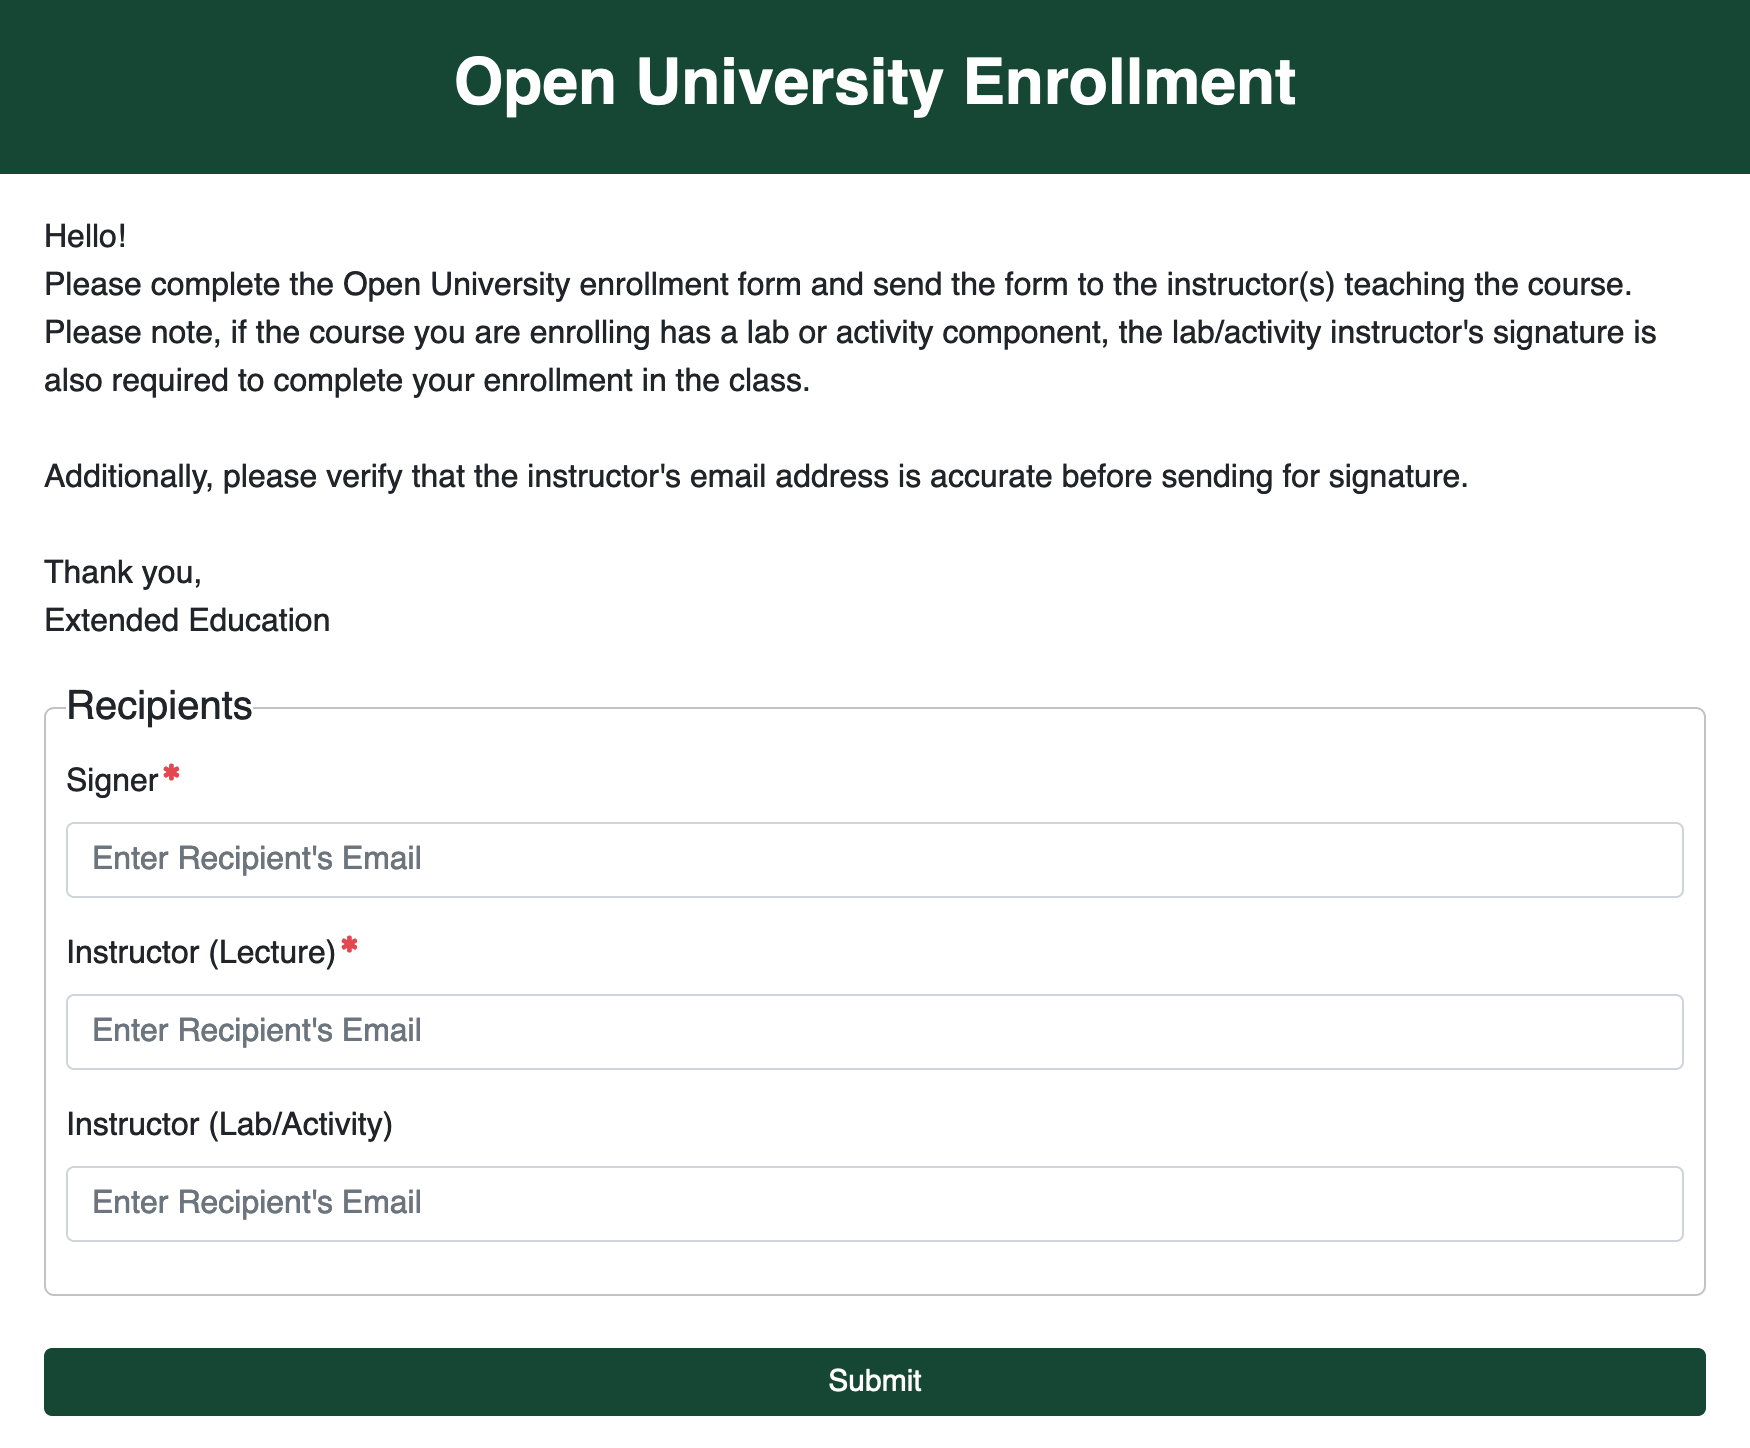 Open University Enrollment Image